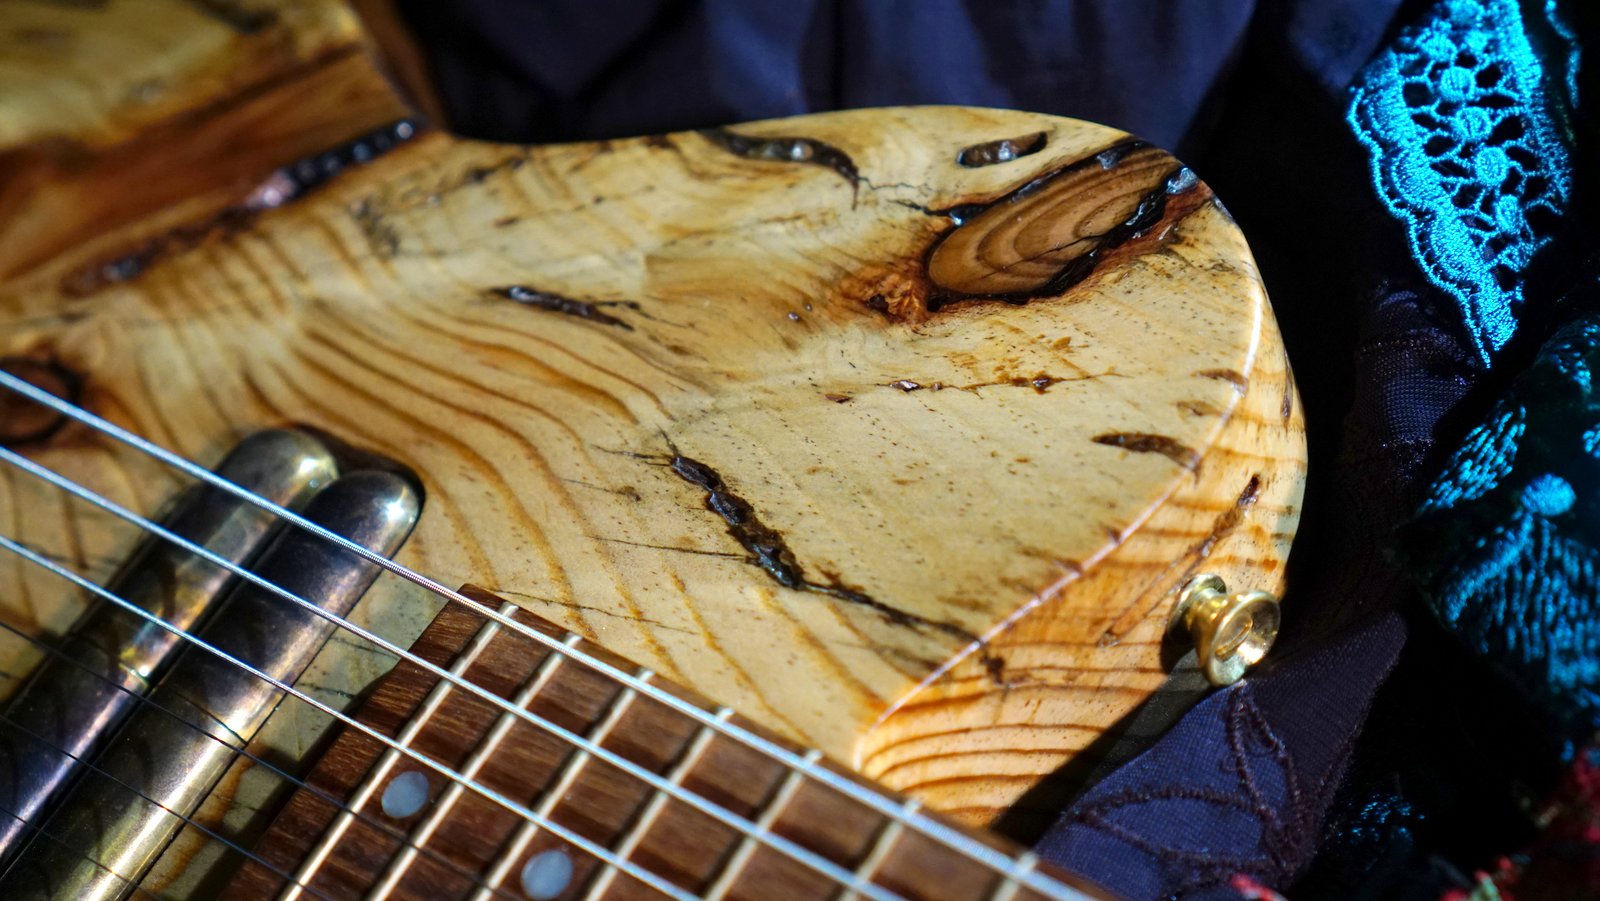 Boutique Guitar - Salvaged "Battlescar" Jerusalem Pine Sonic Wonder Guitar